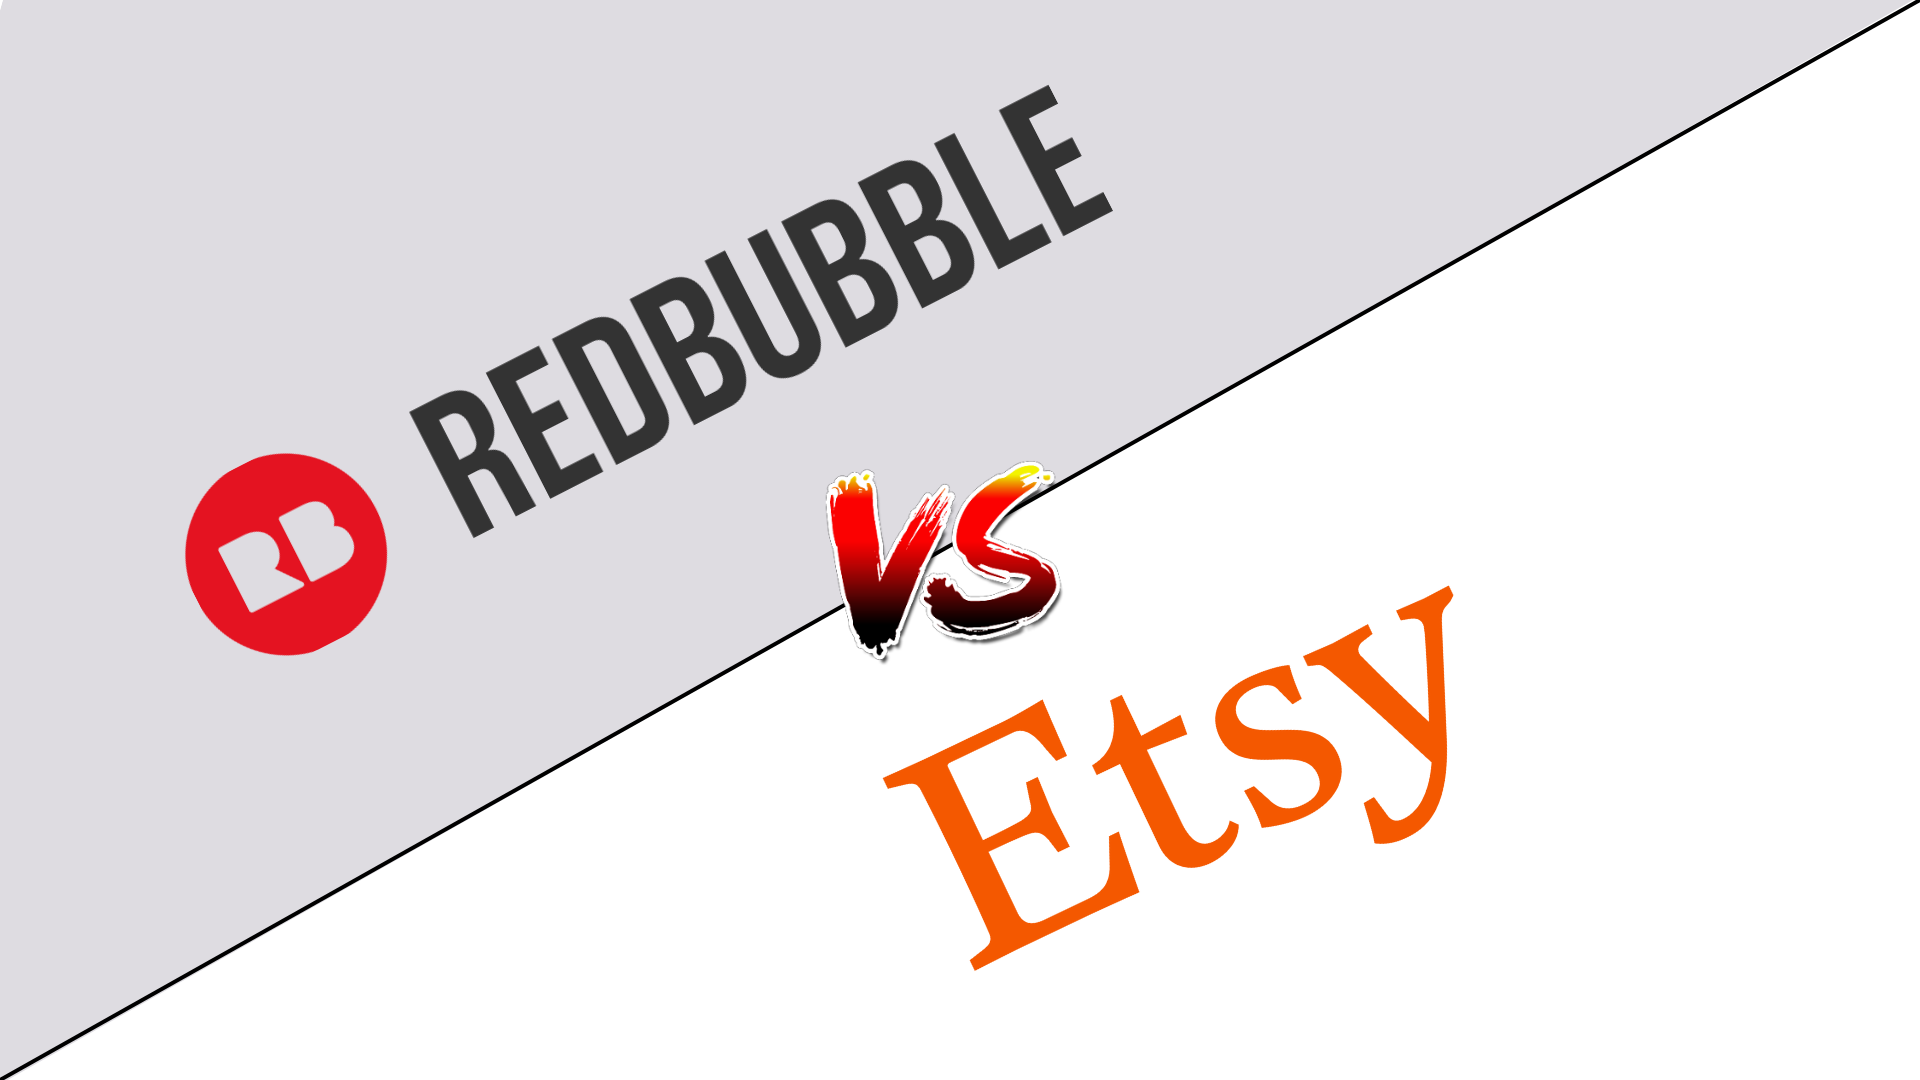 redbubble vs etsy print on demand